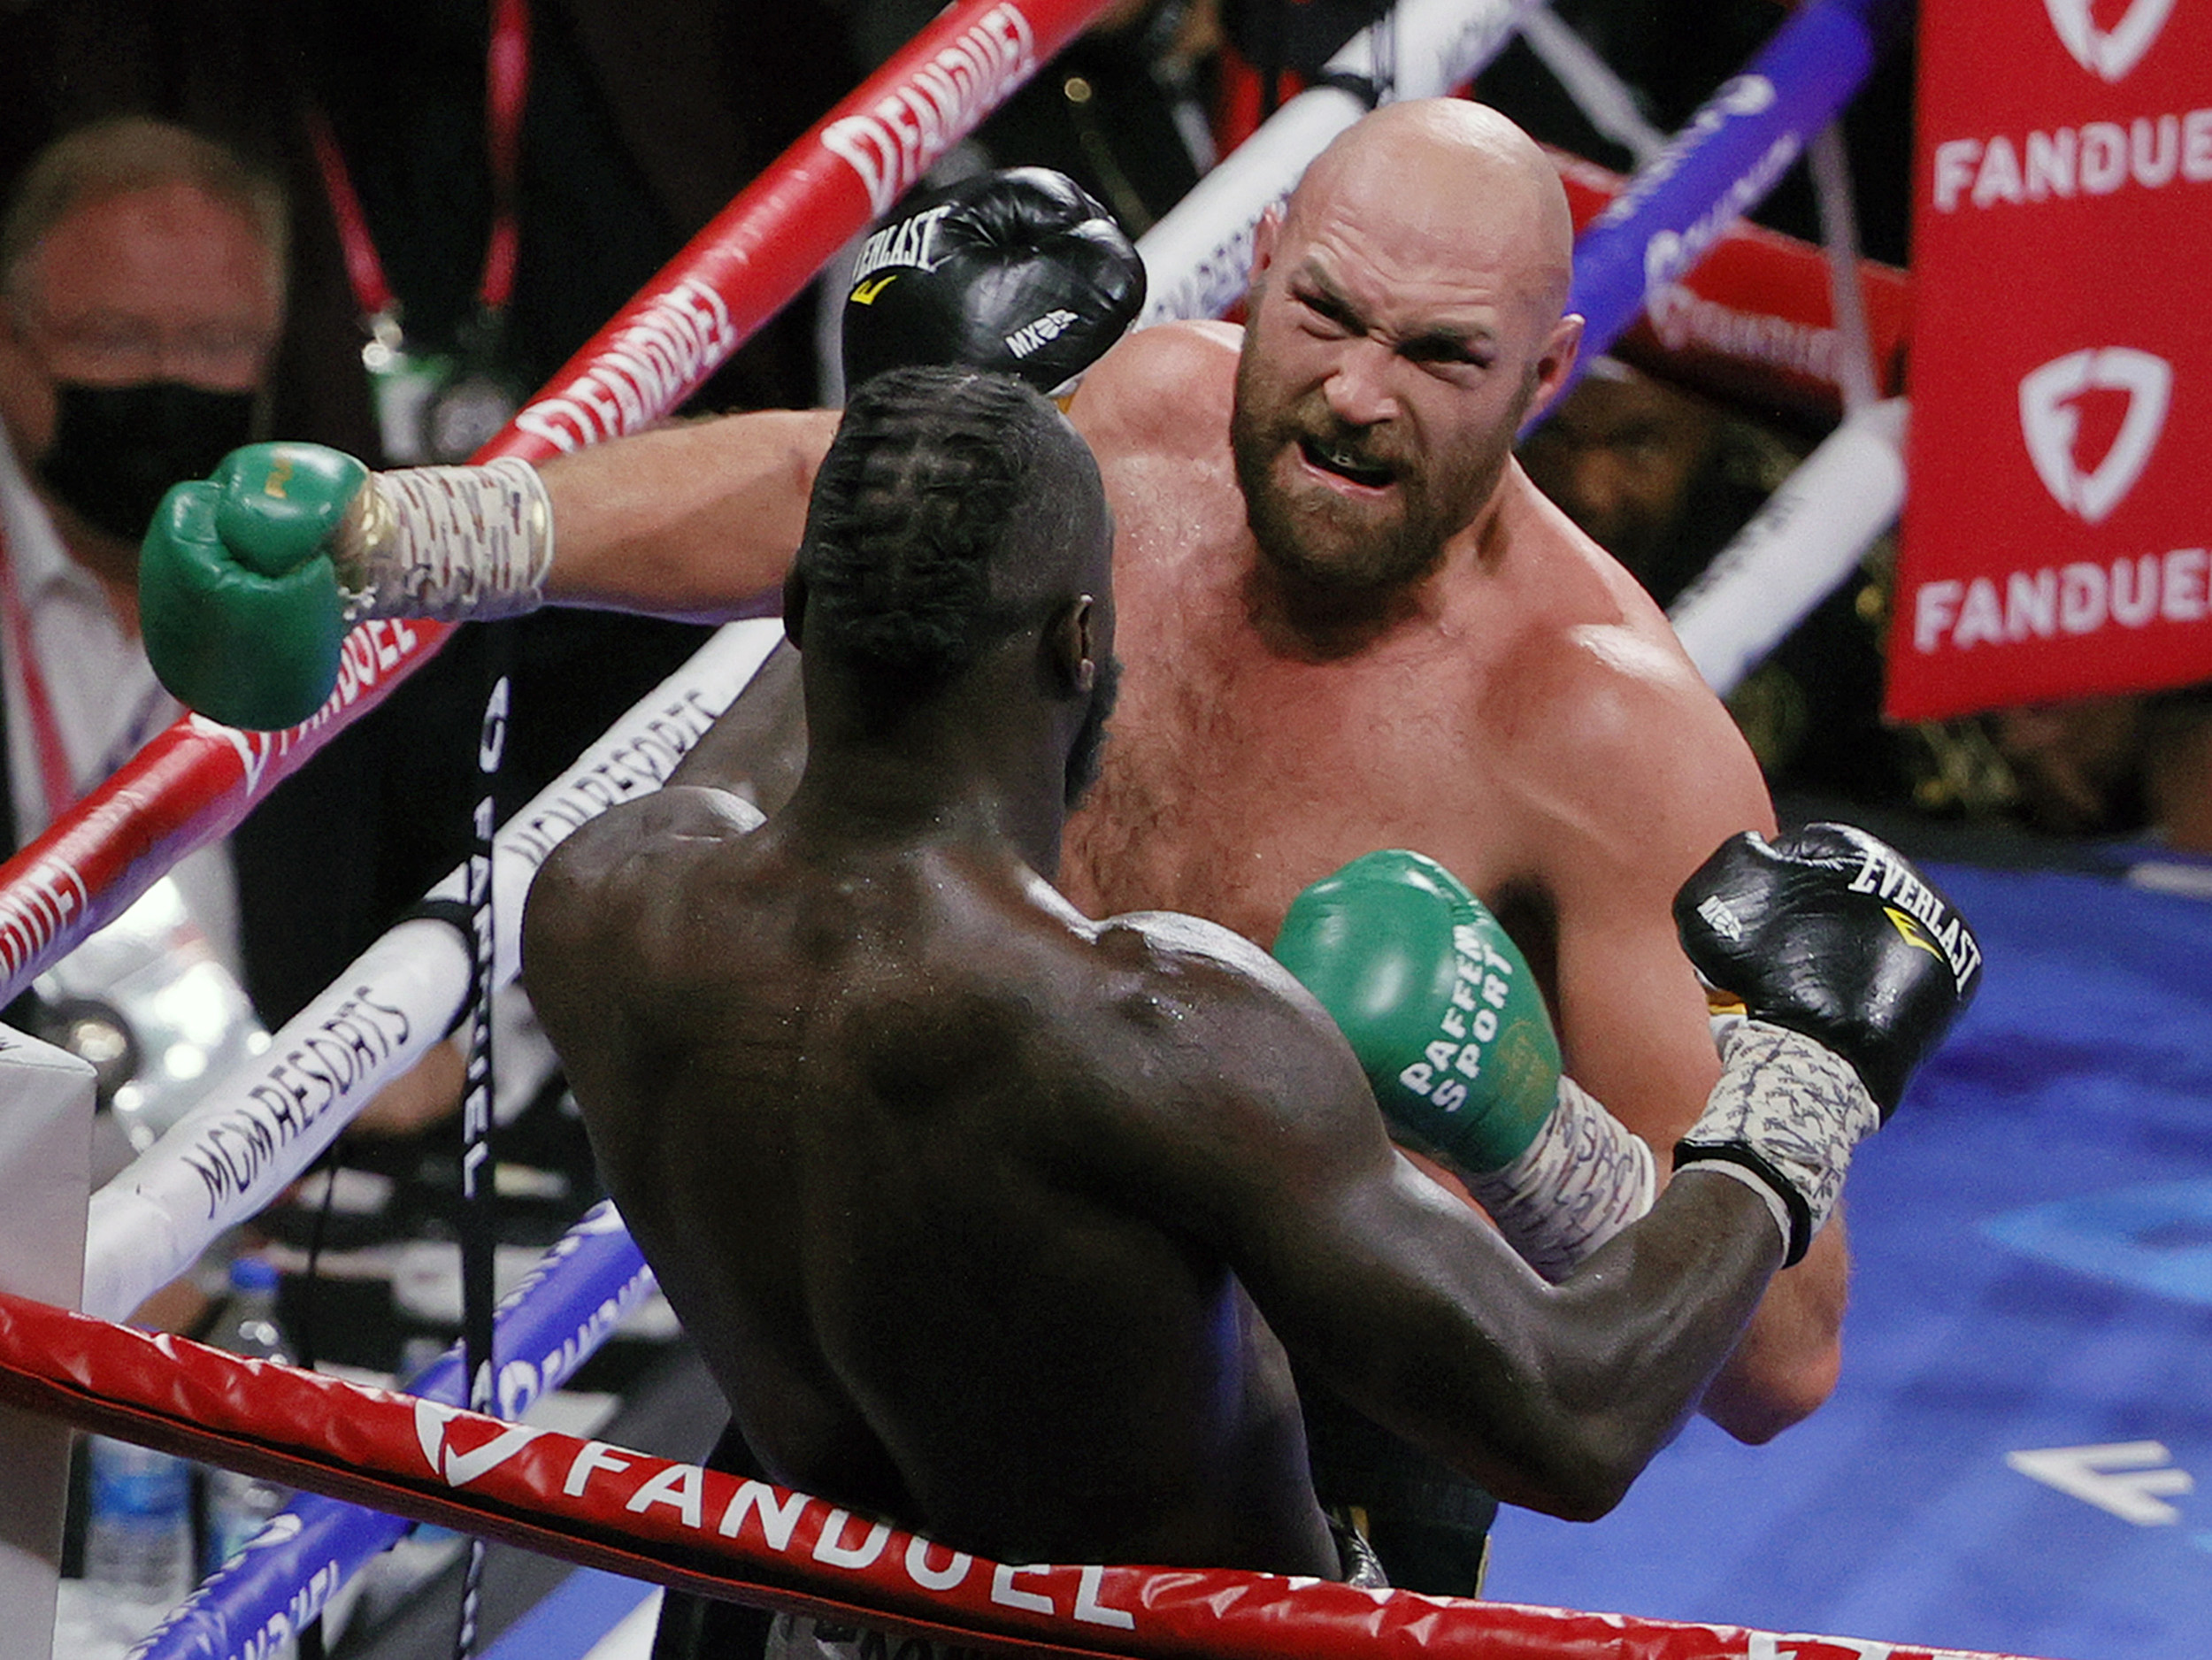 Deontay Wilder vs. Tyson Fury II: Philadelphia expected to be top